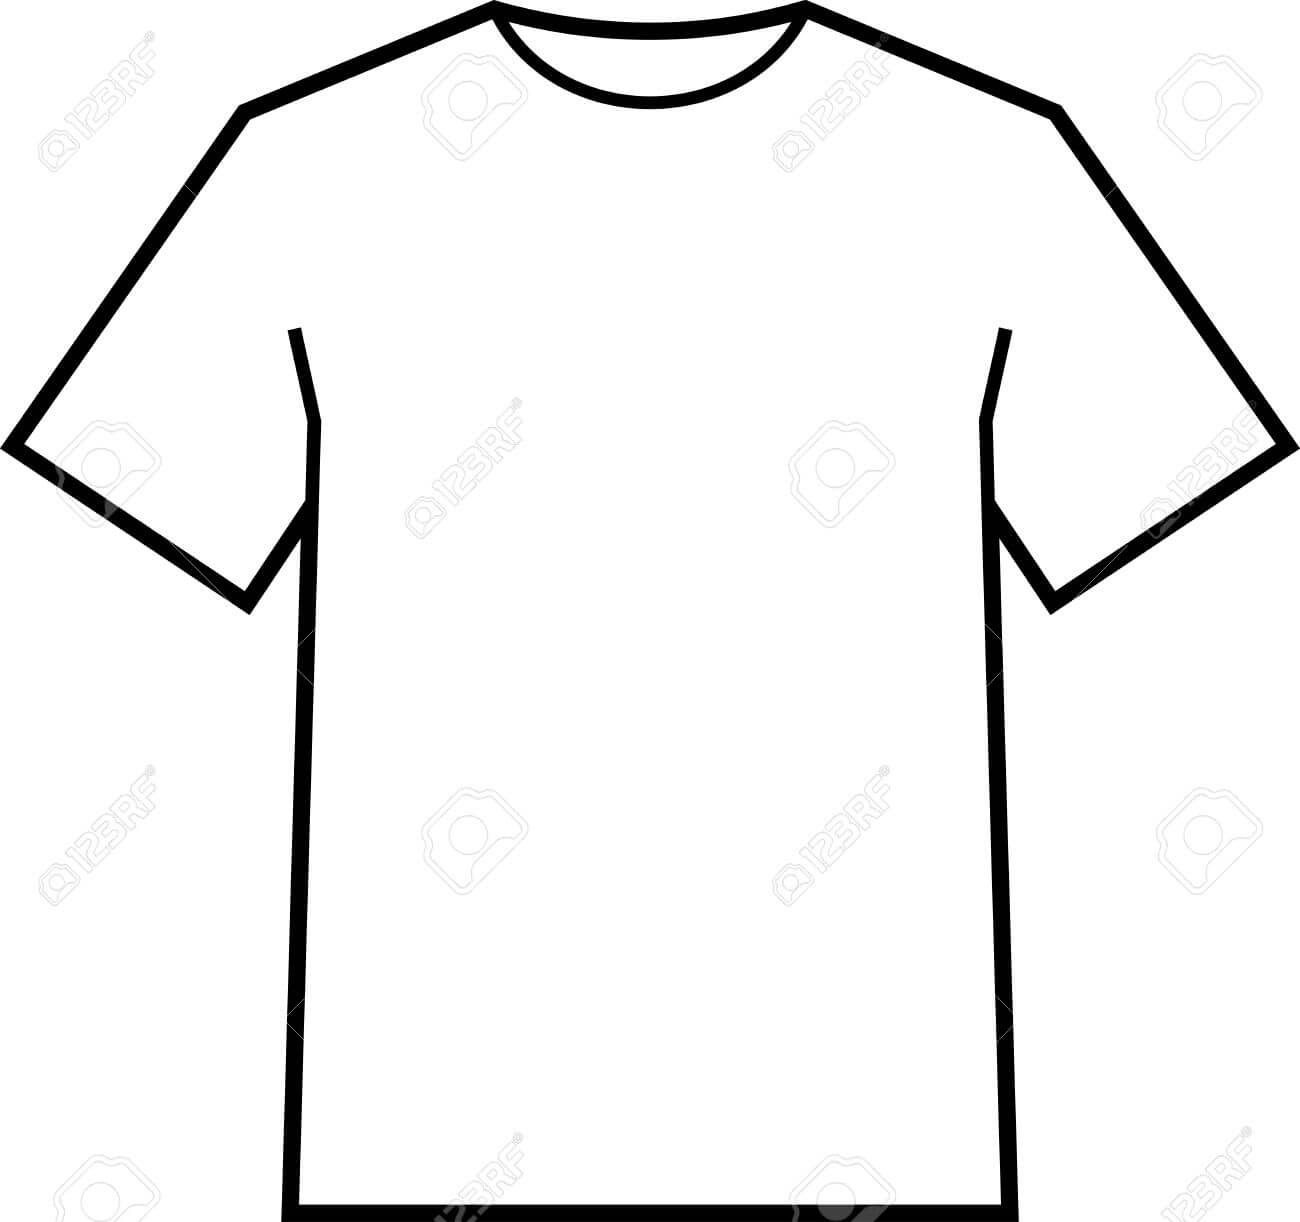 Blank T Shirt Template Vector With Regard To Blank Tee Shirt Template